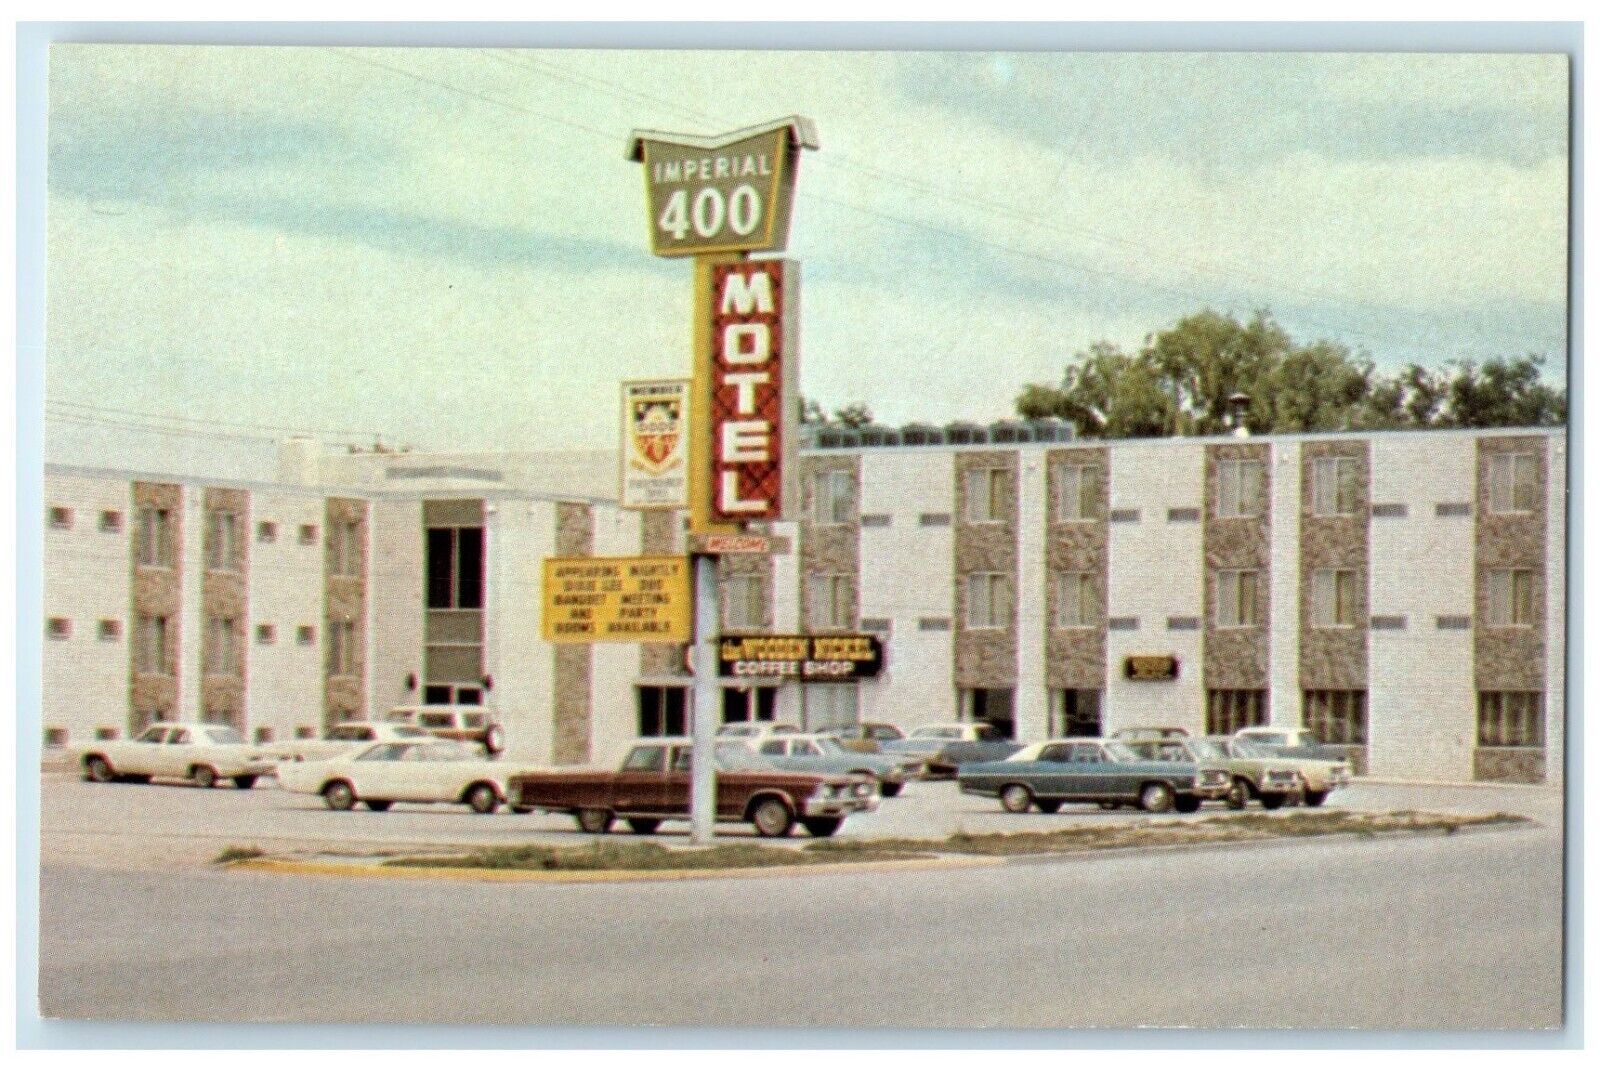 c1960 Friendship Inn Imperial Motel Restaurant Rapid City South Dakota Postcard